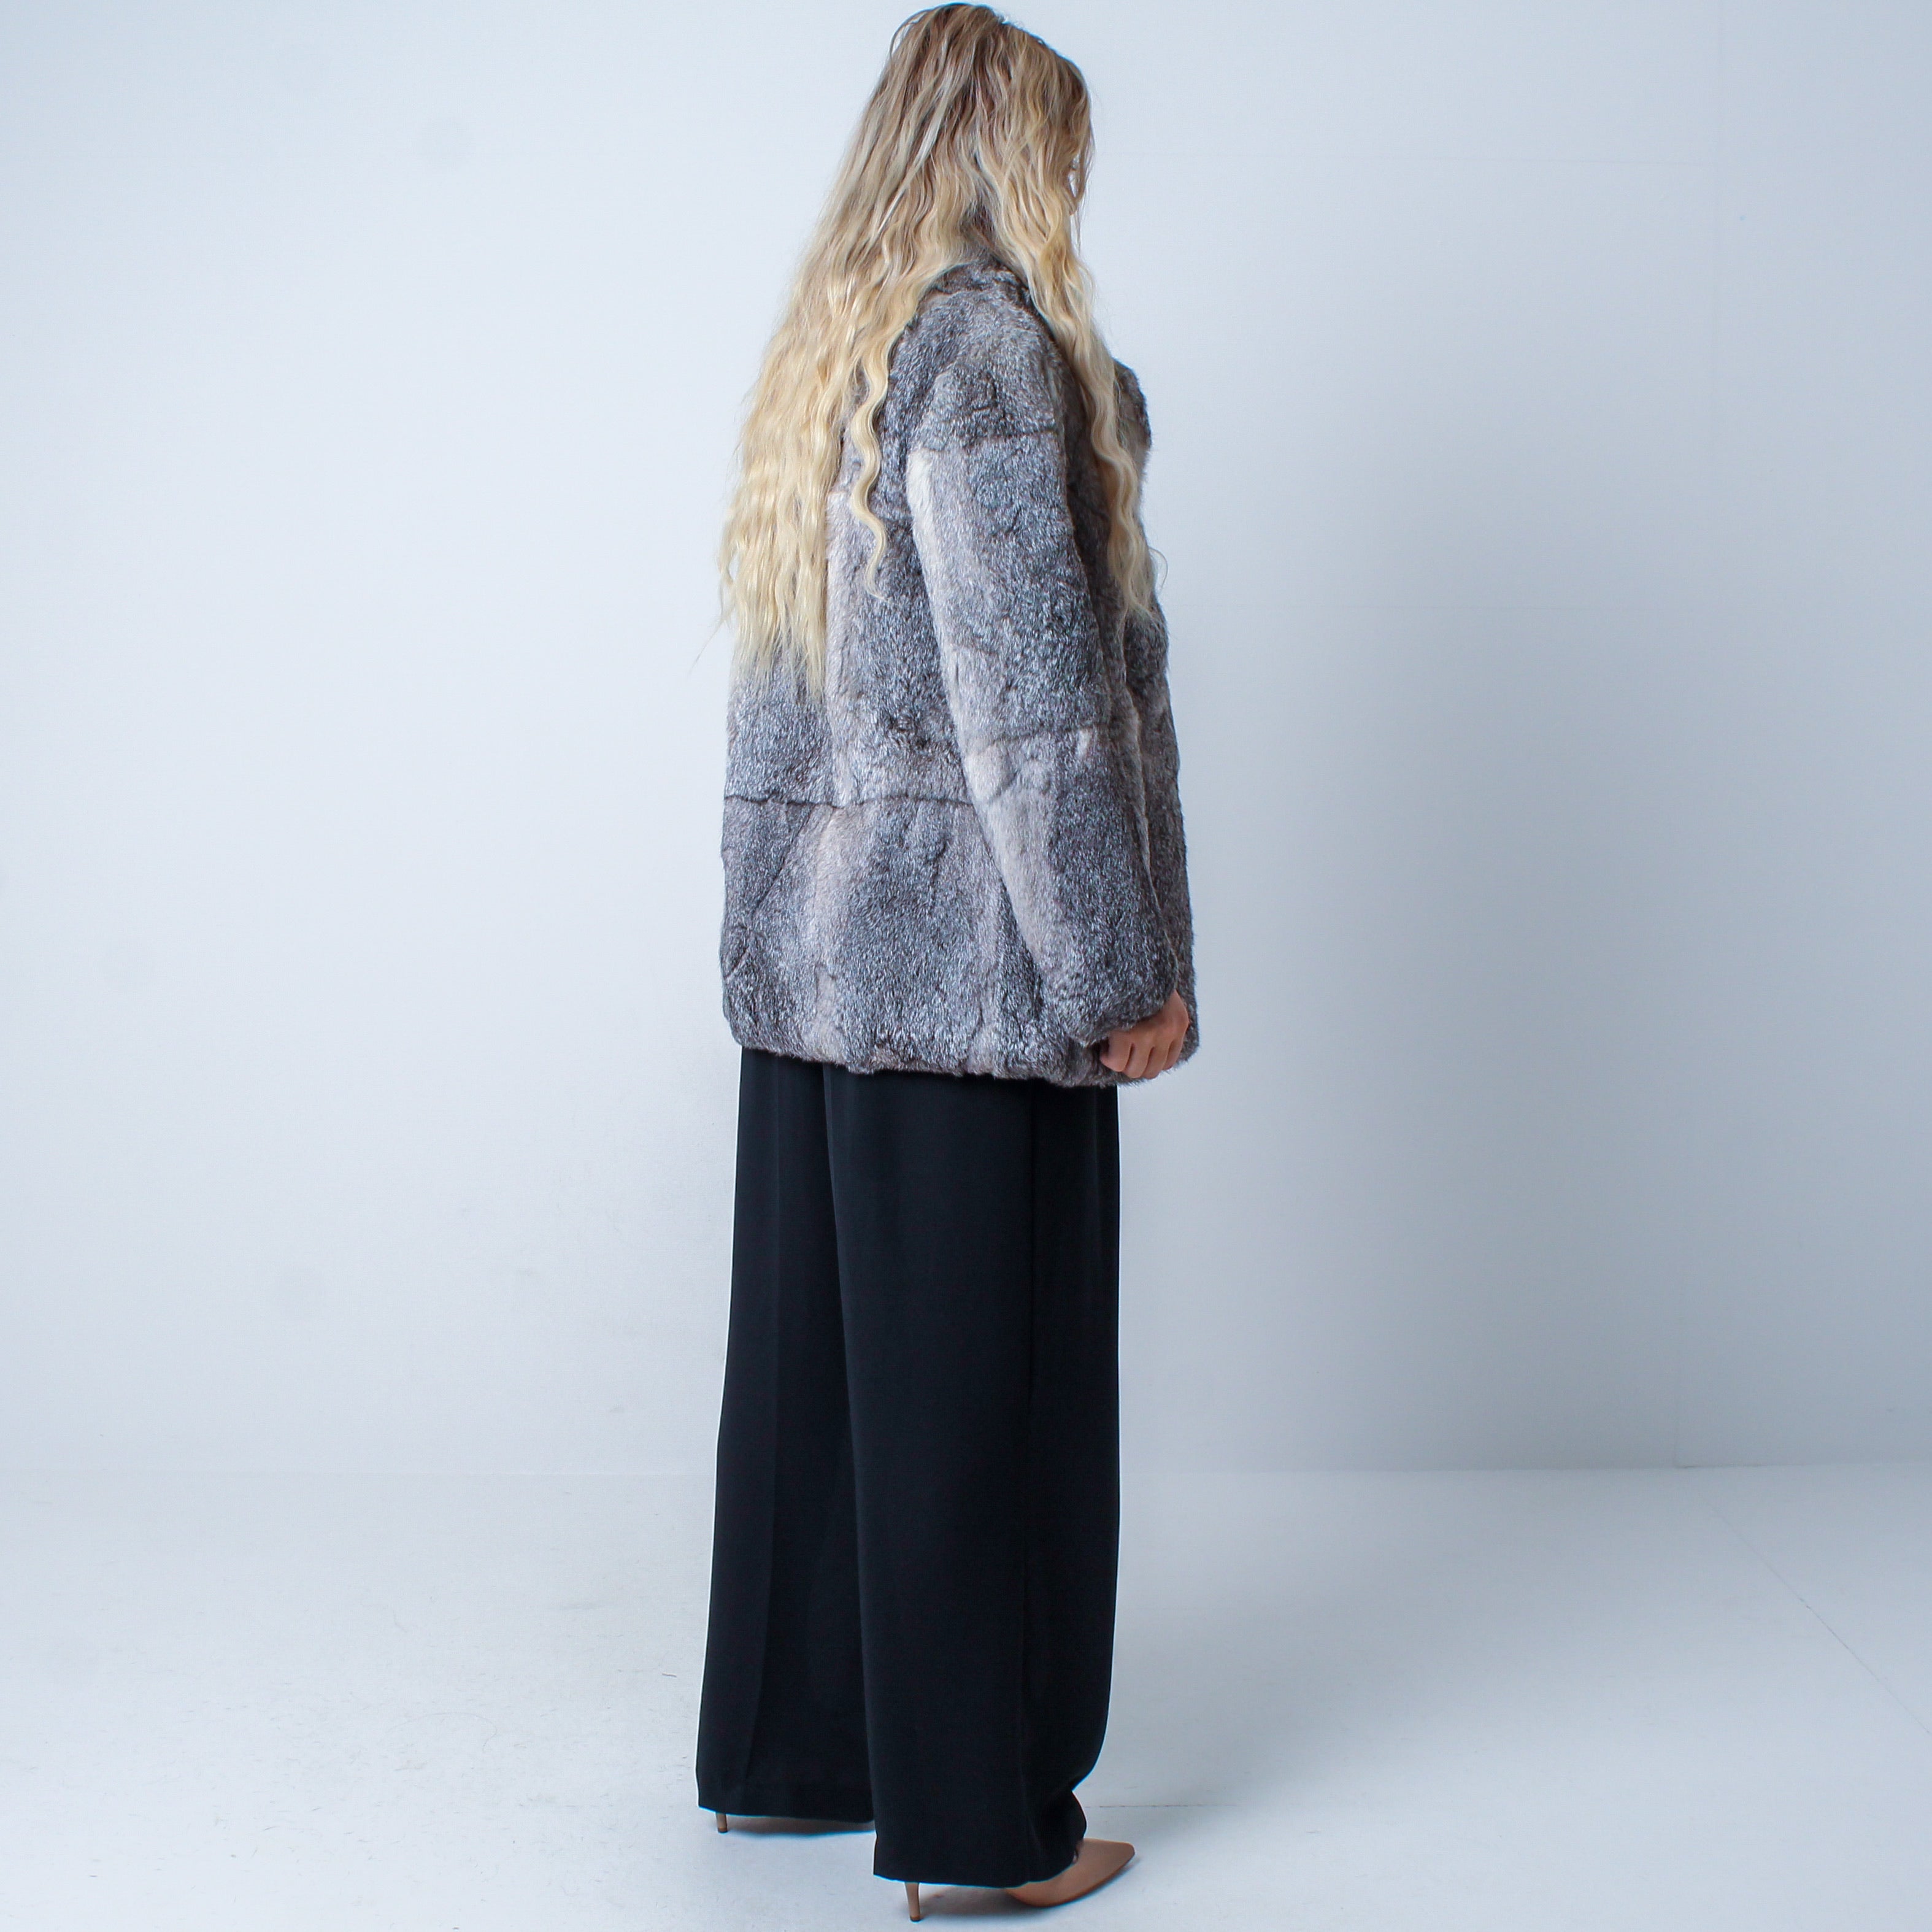 Women’s Vintage Rabbit Fur Coat Size: Small-Medium UK 8-12